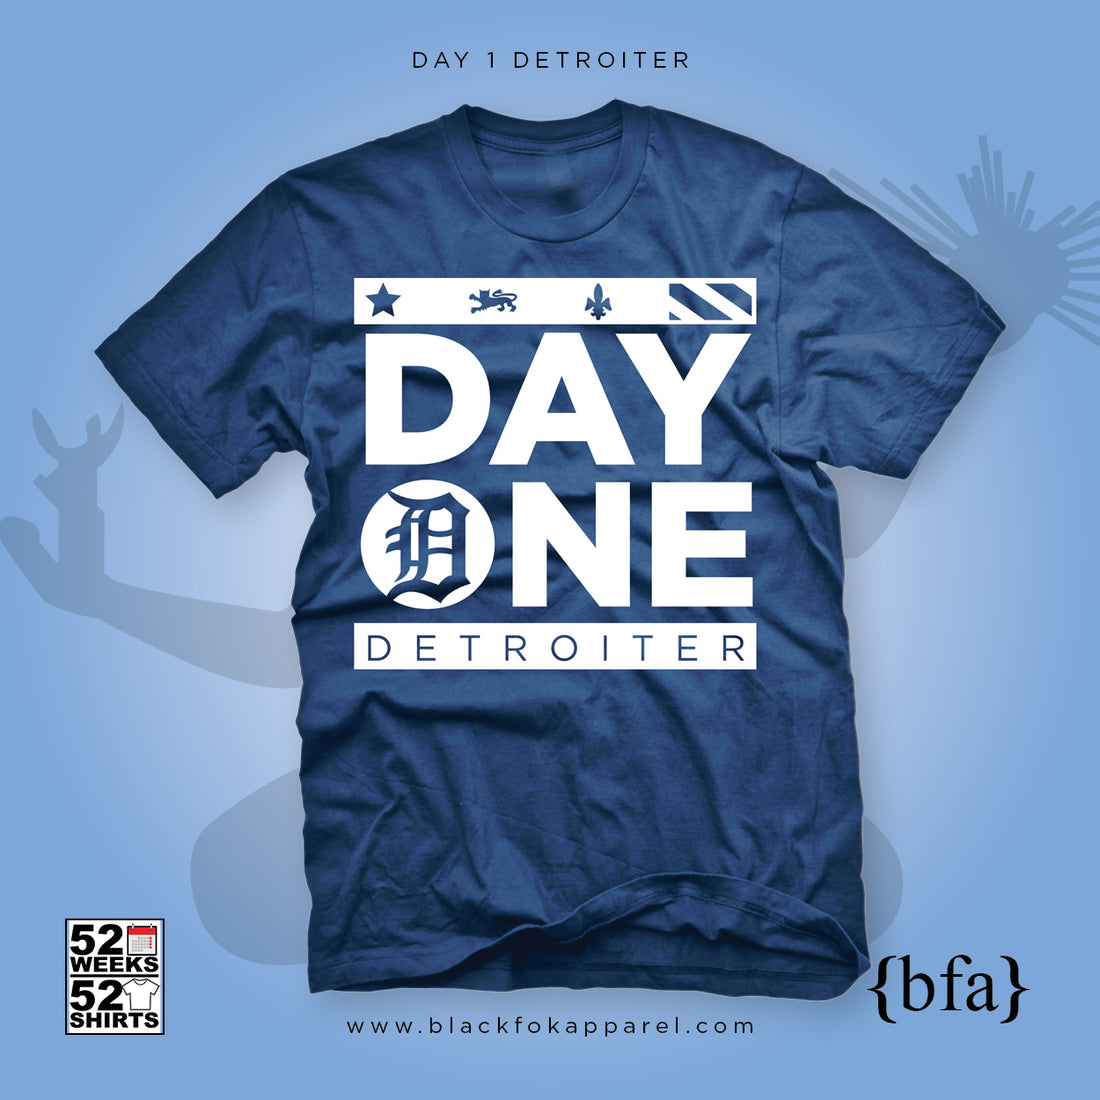 Week 21 - Day One Detroiter #52weeks52shirts